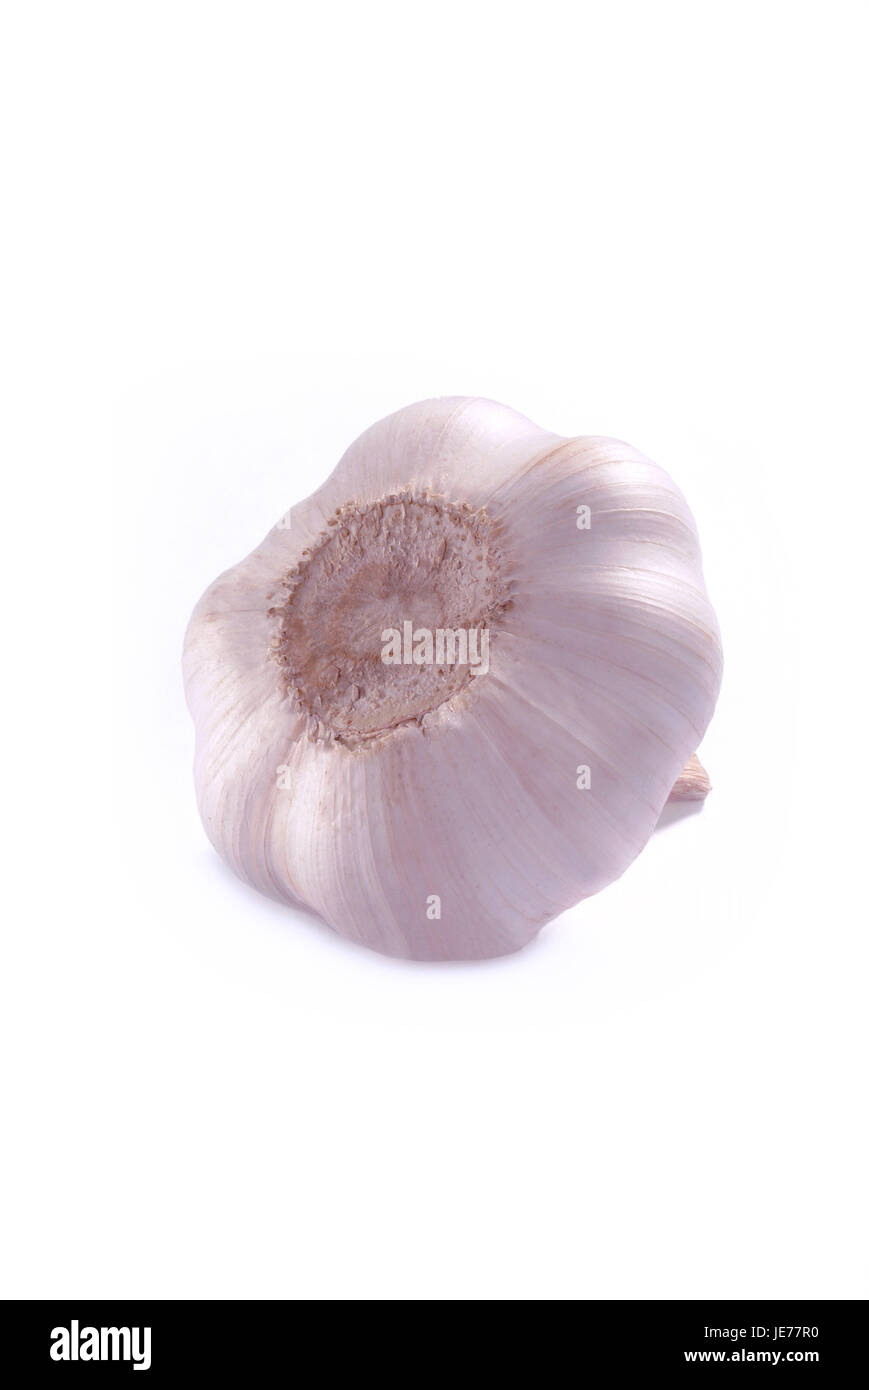 Garlic, Stock Photo